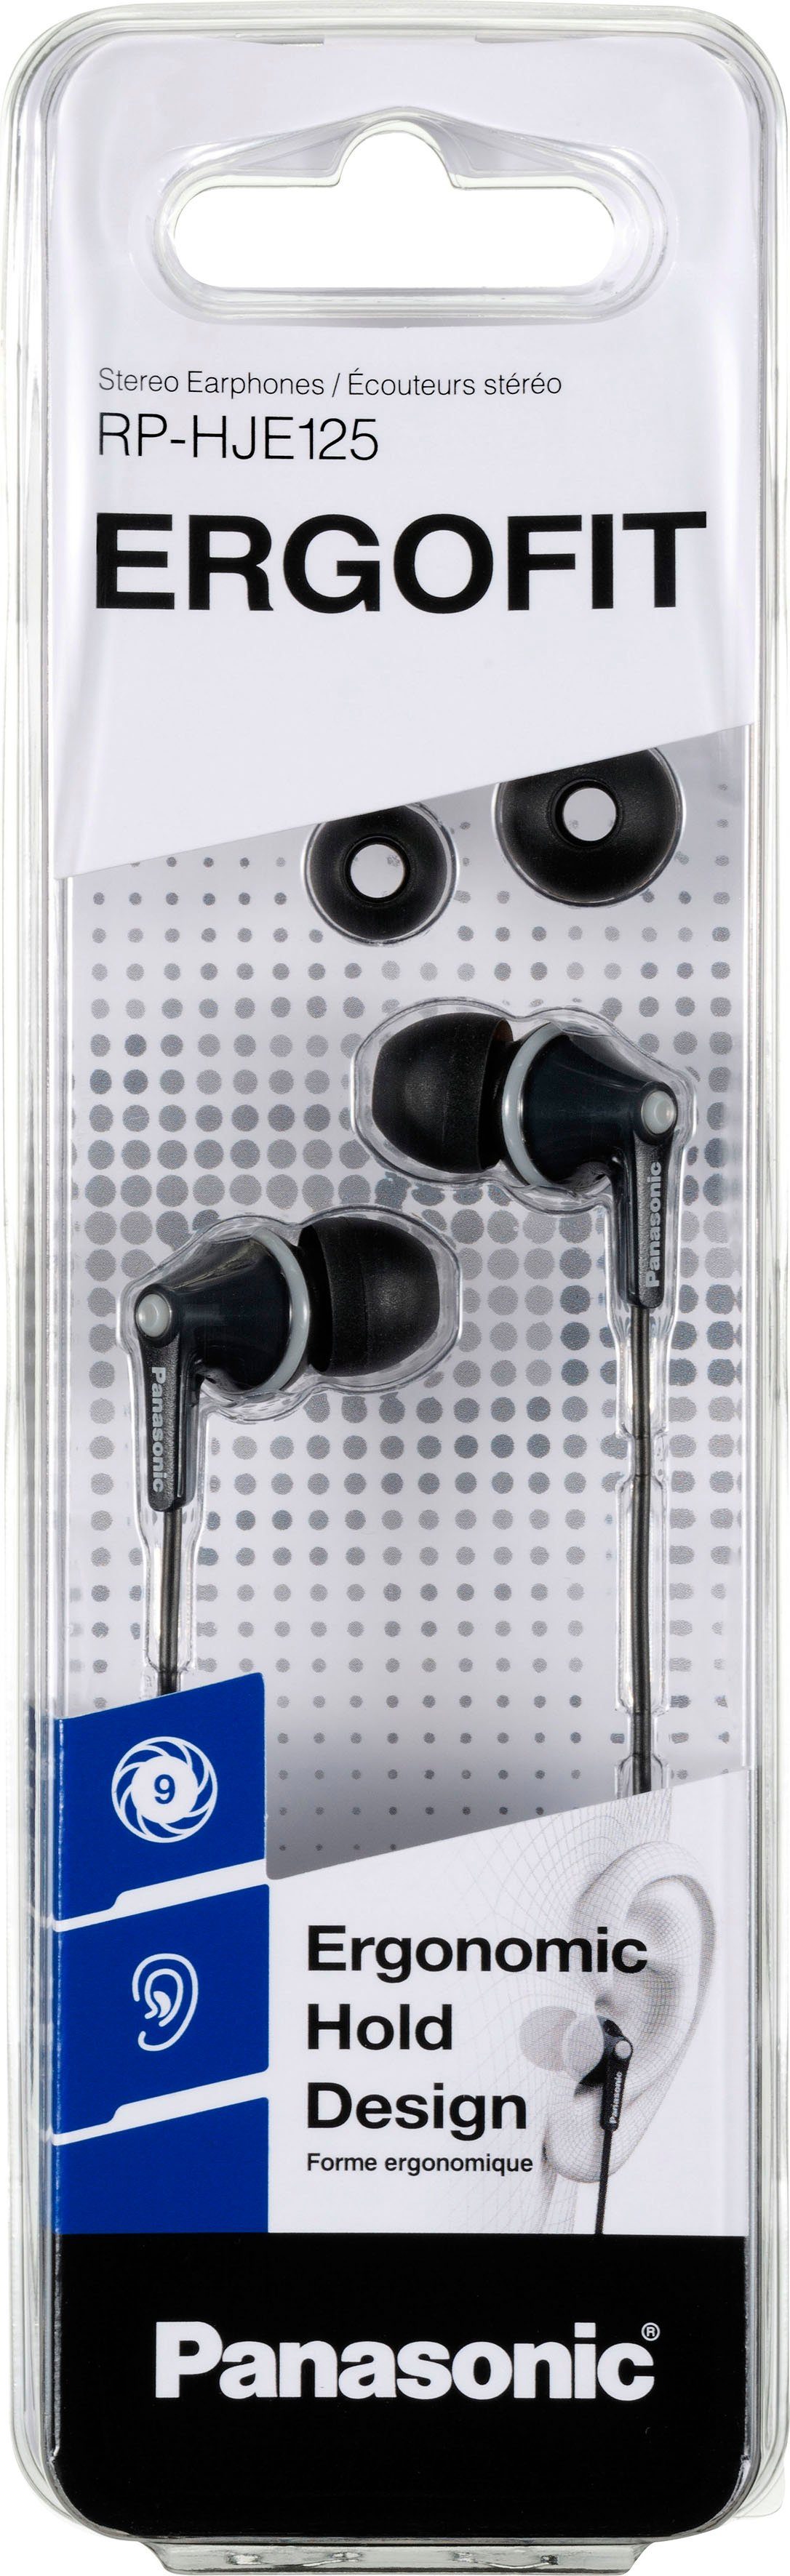 Panasonic RP-HJE125 schwarz In-Ear-Kopfhörer